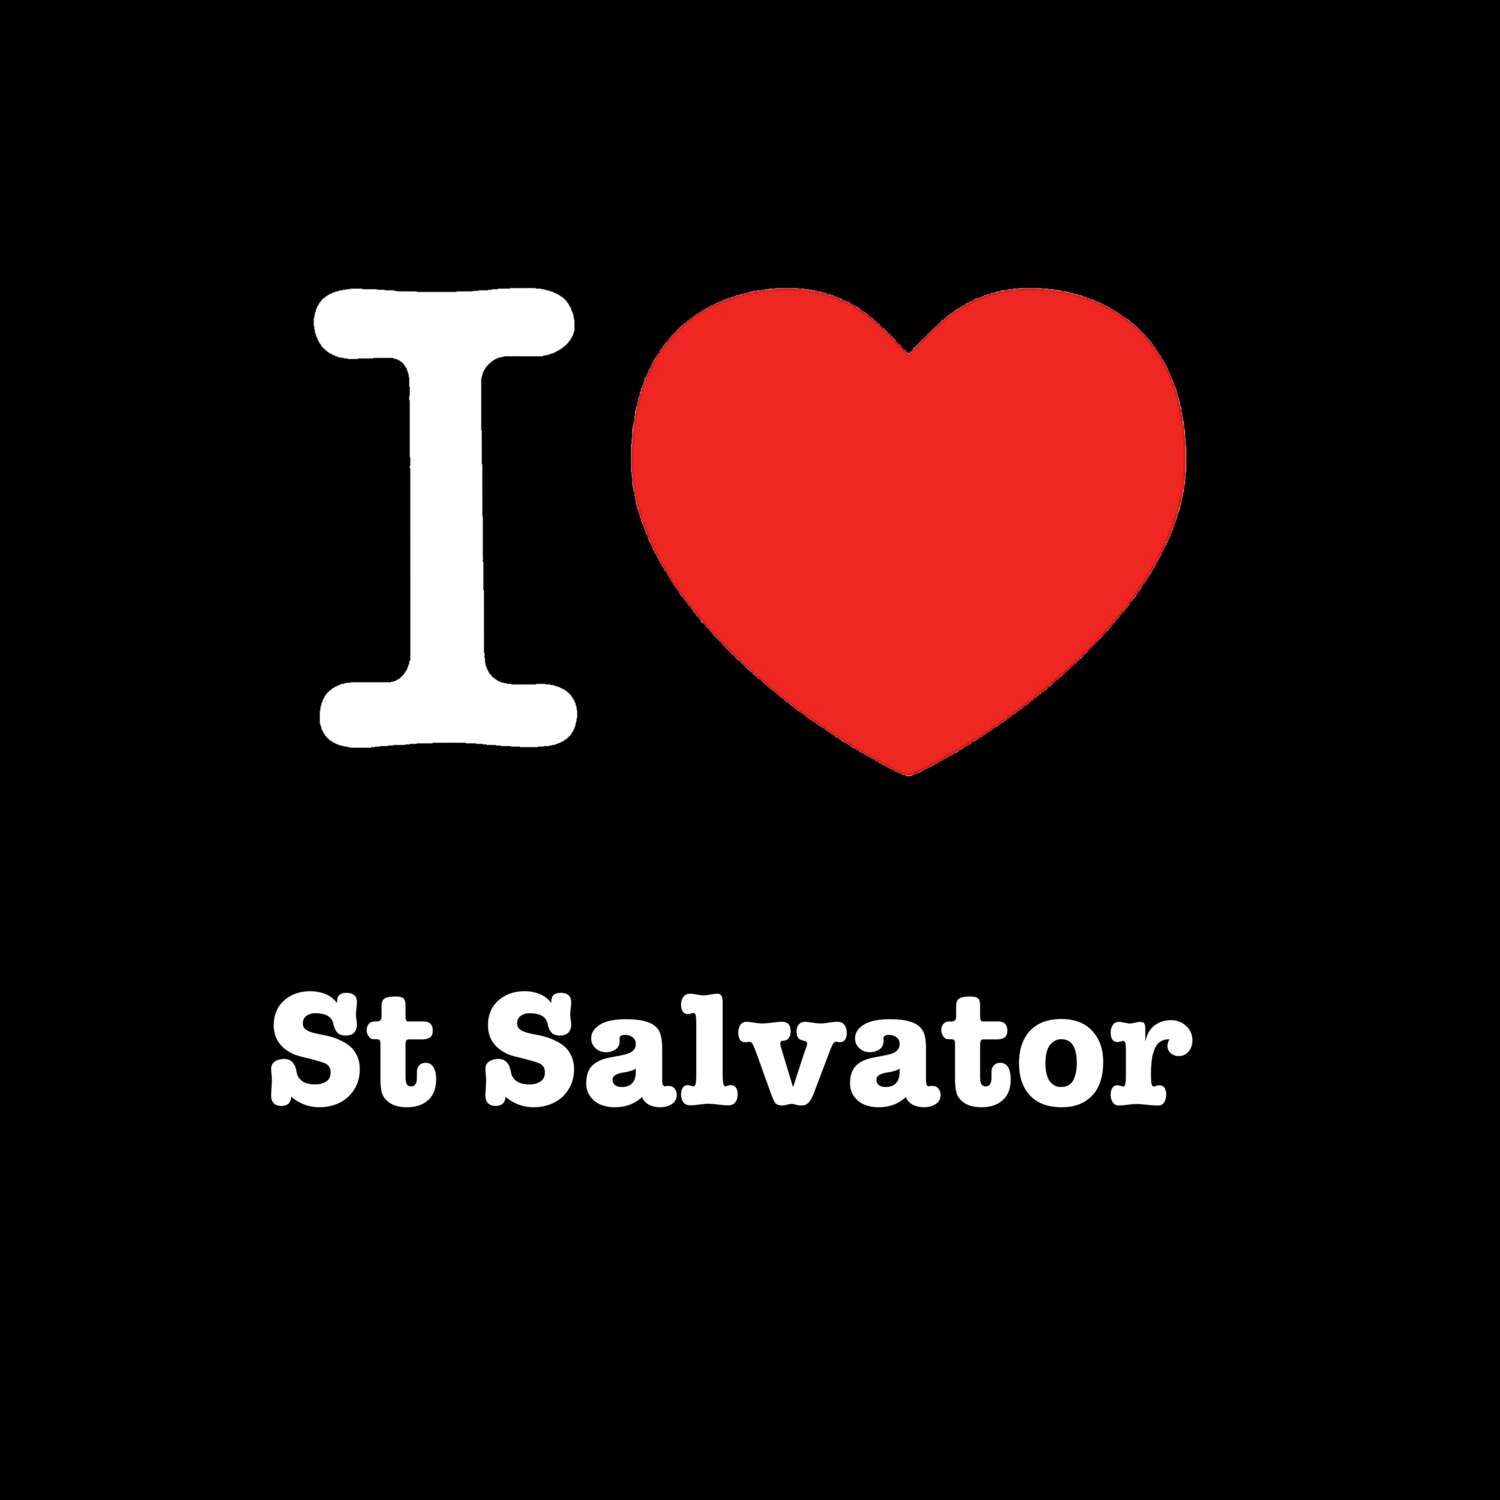 St Salvator T-Shirt »I love«